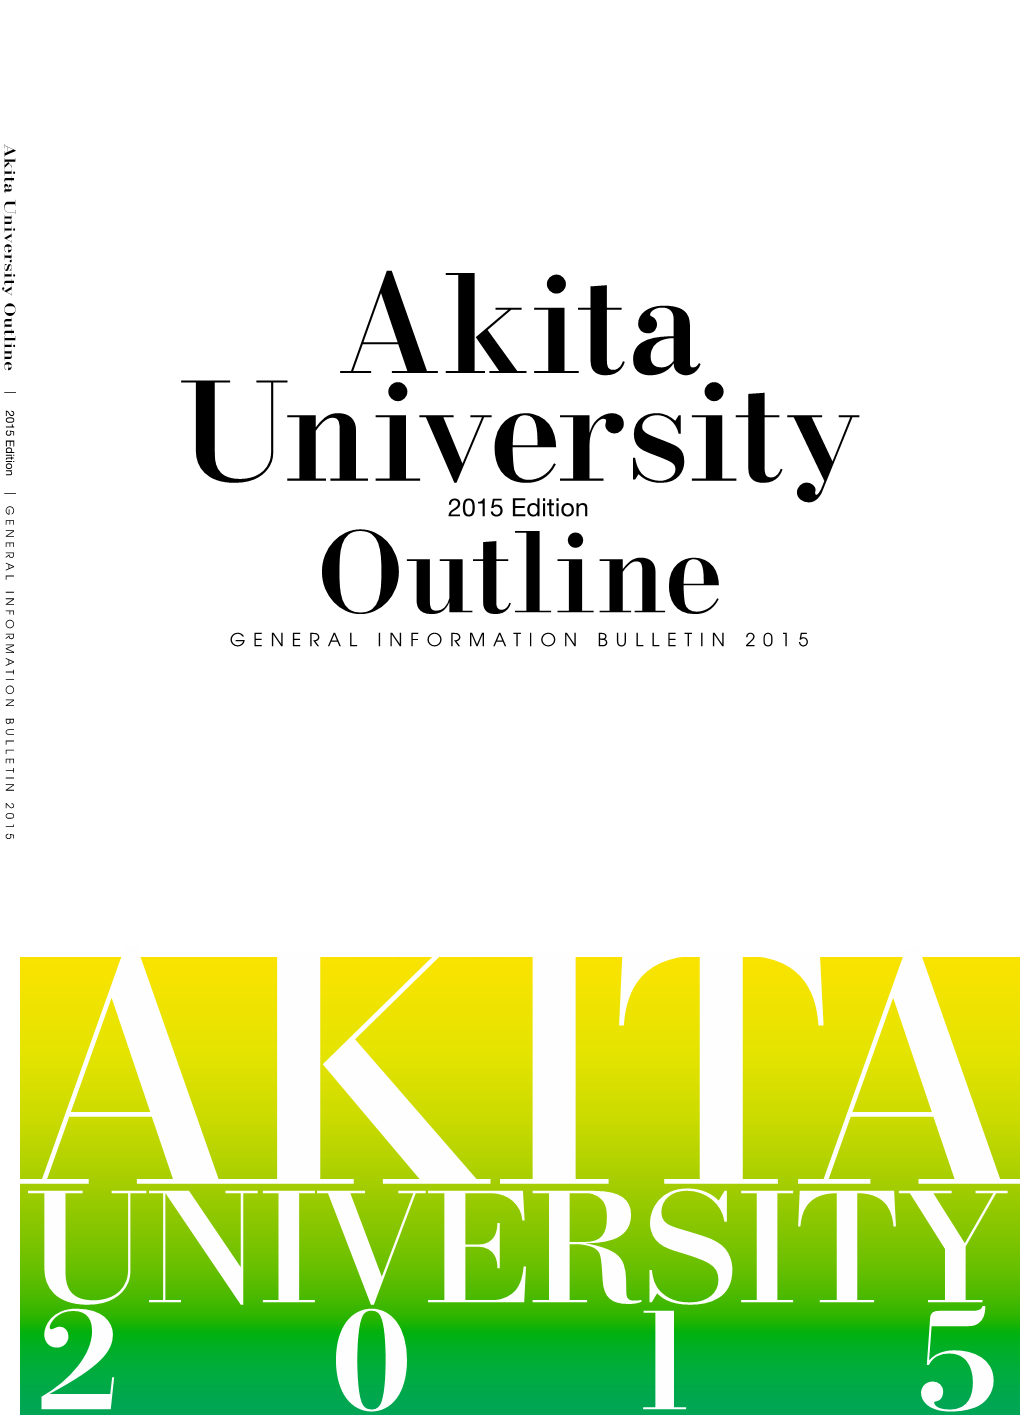 Akita University General Information Bulletin 2015